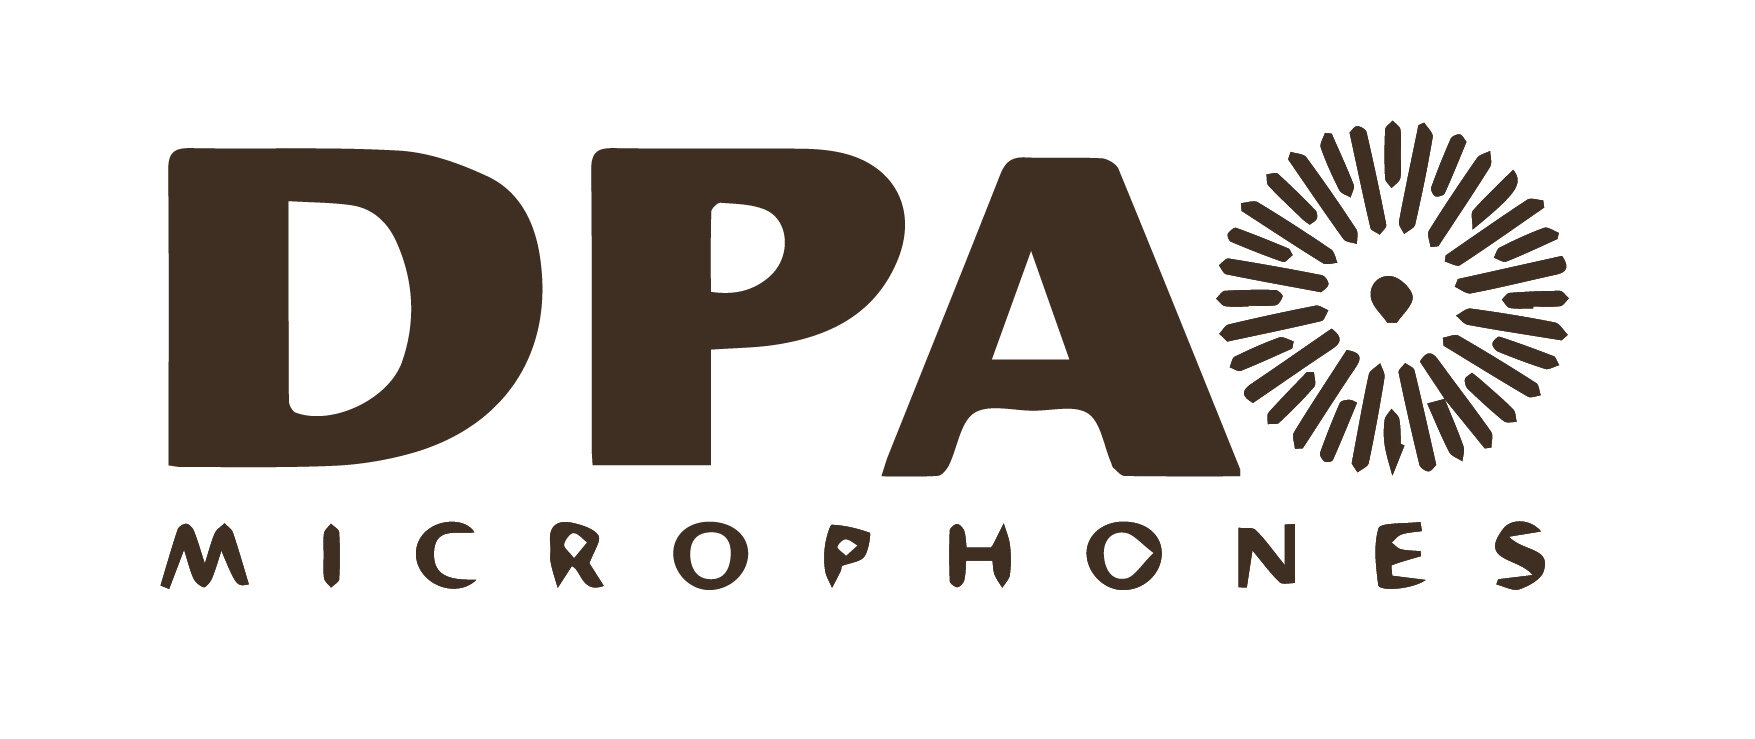 DPA brown logo.jpg